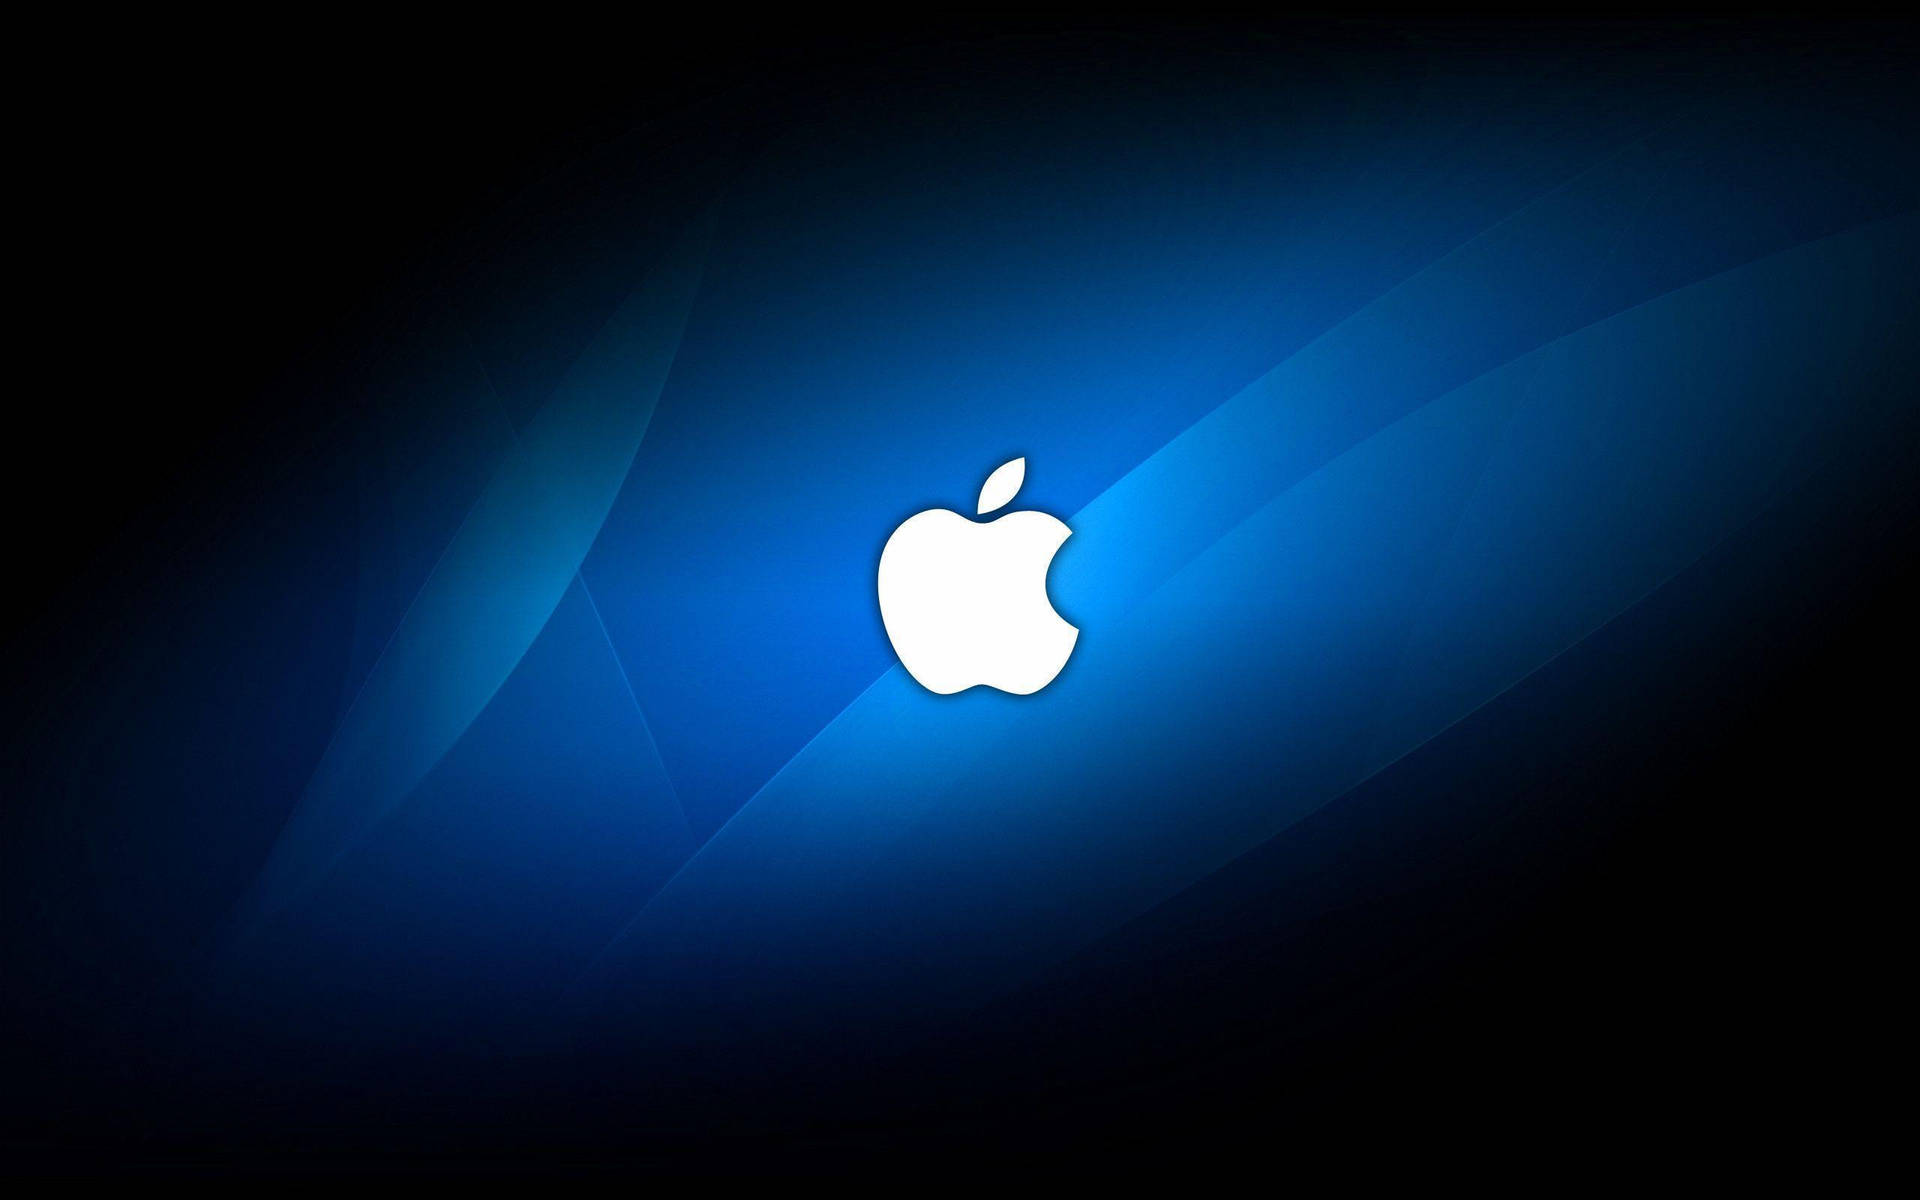 Apple Logo On Black And Blue Background